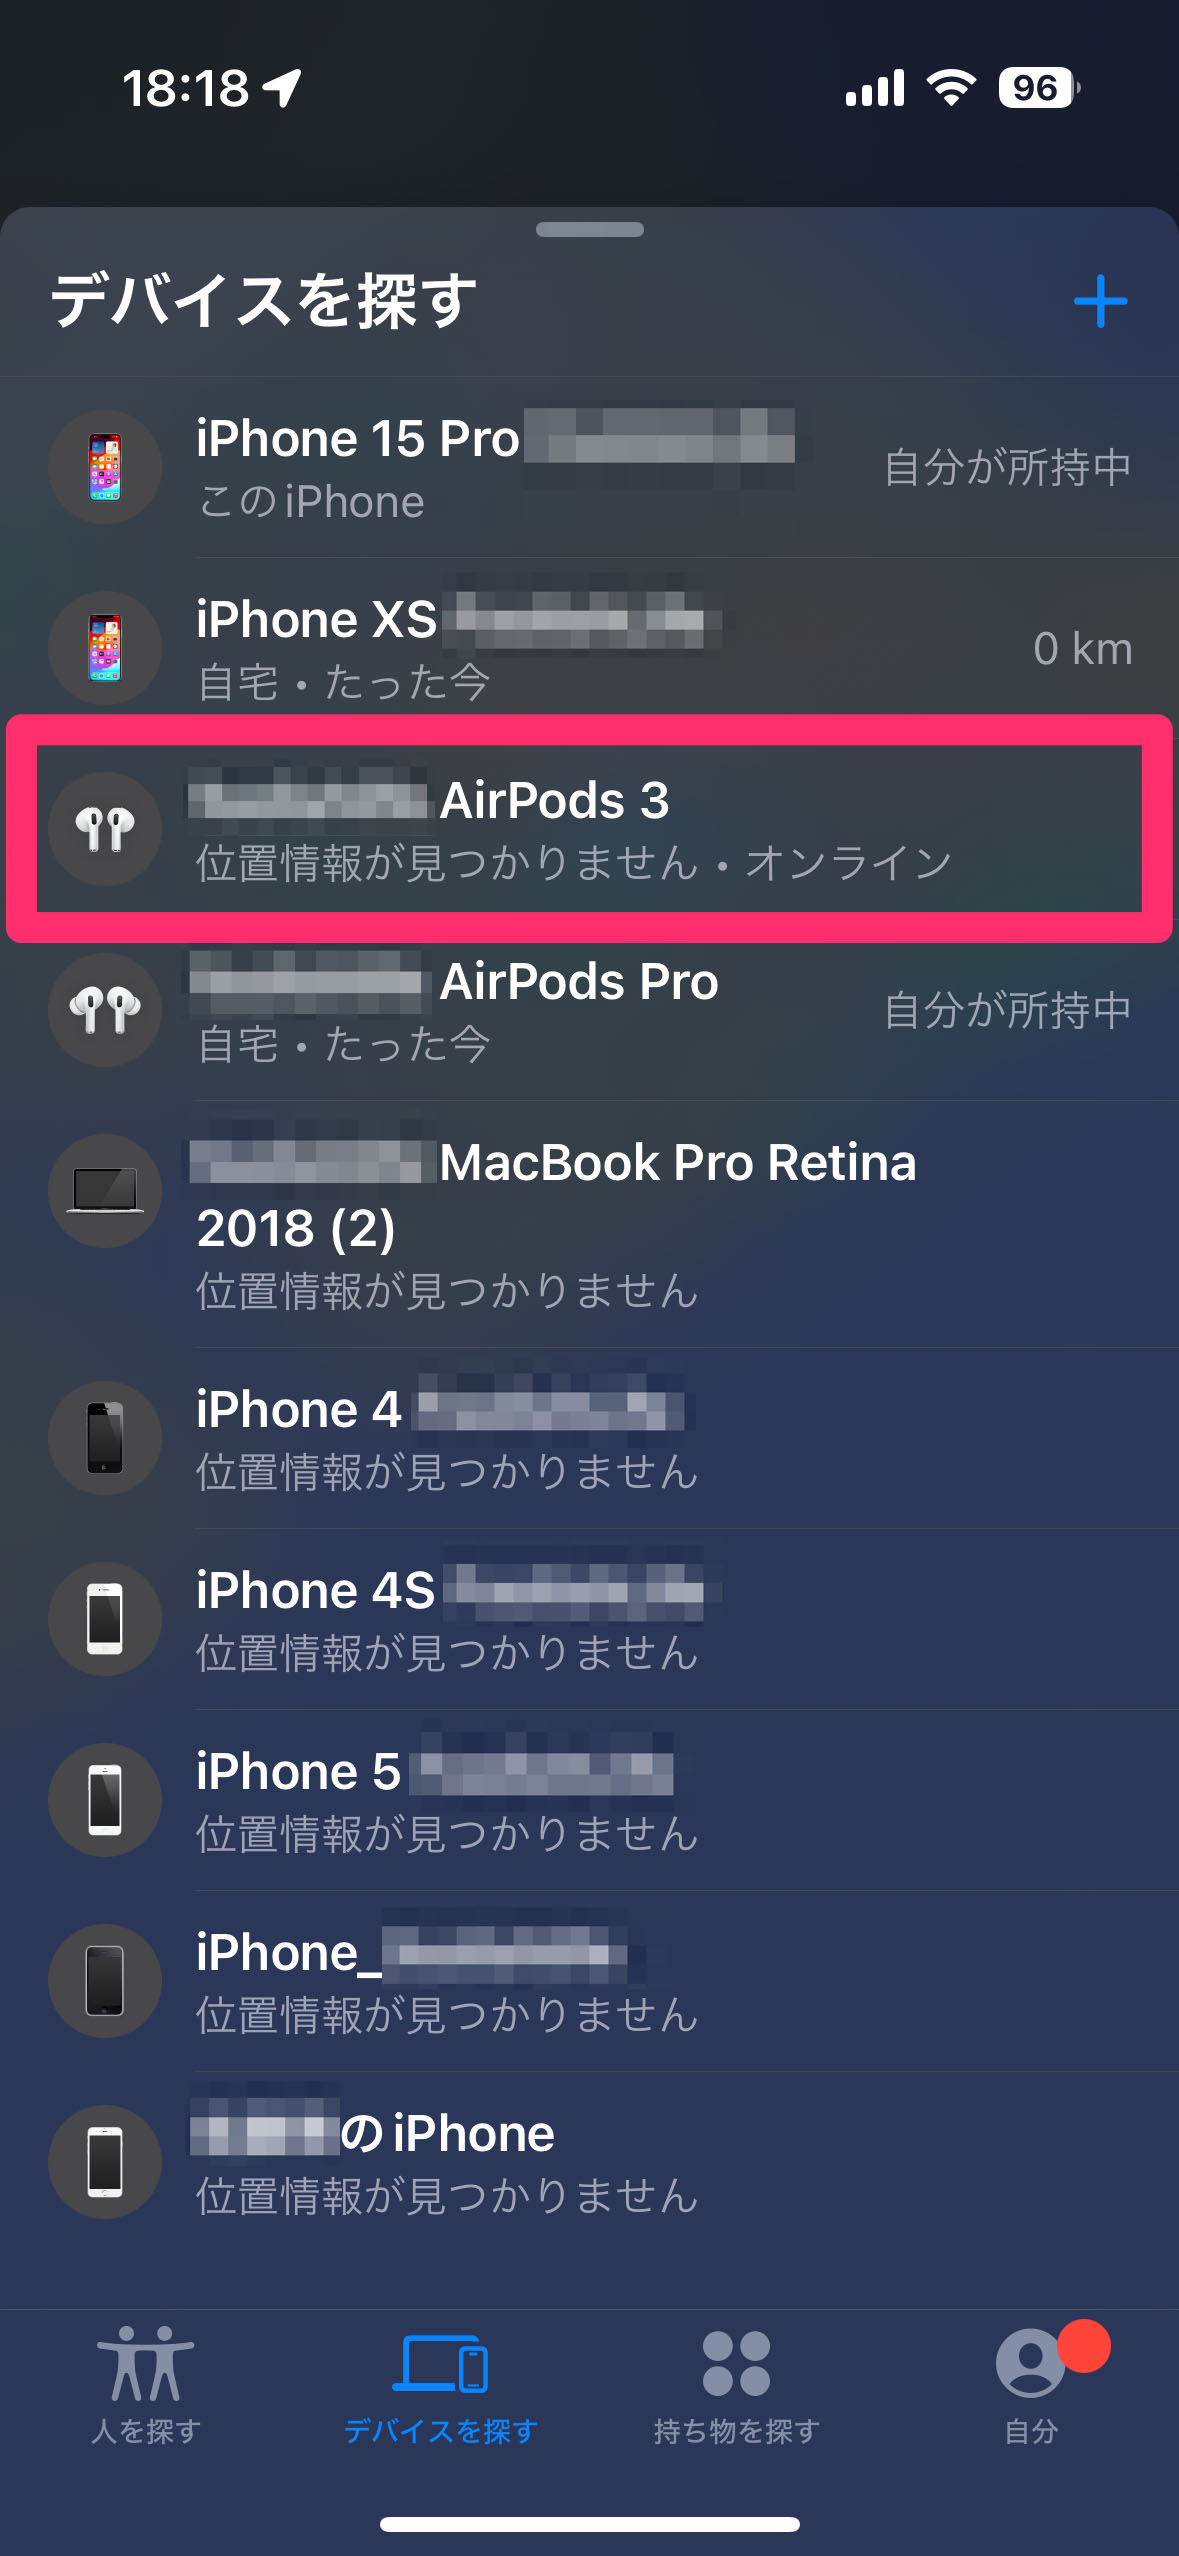 AirPods 3がなぜか「位置情報が見つかりません」に。